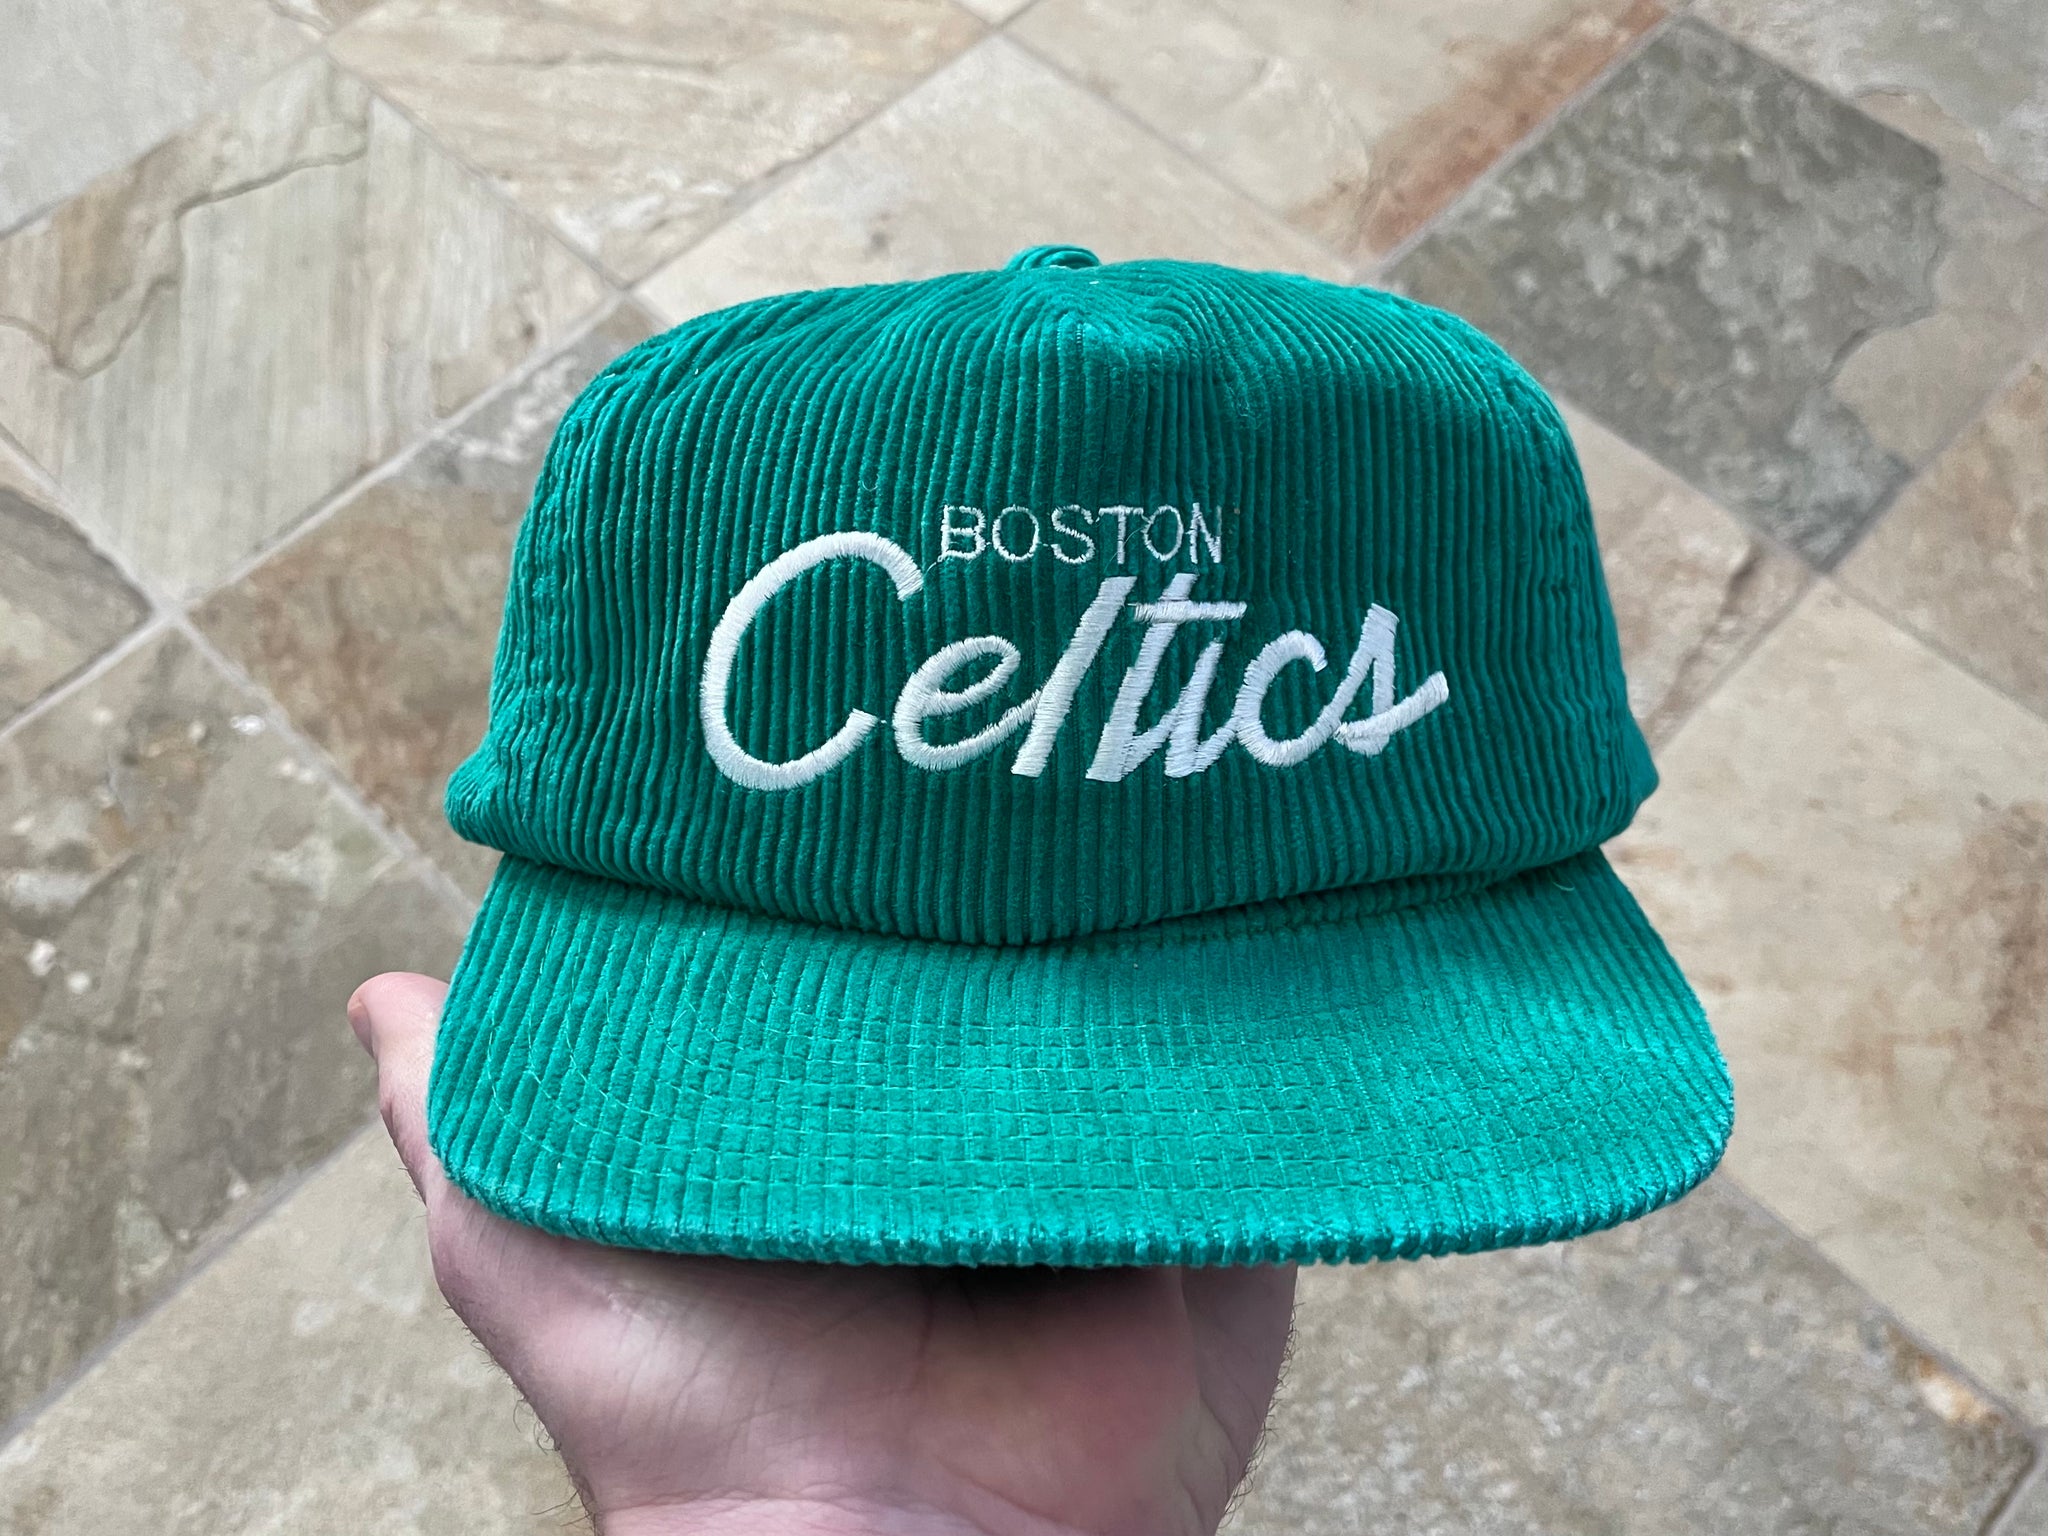 Vintage Celtics Basketball Script (Green) - Boston Celtics - T